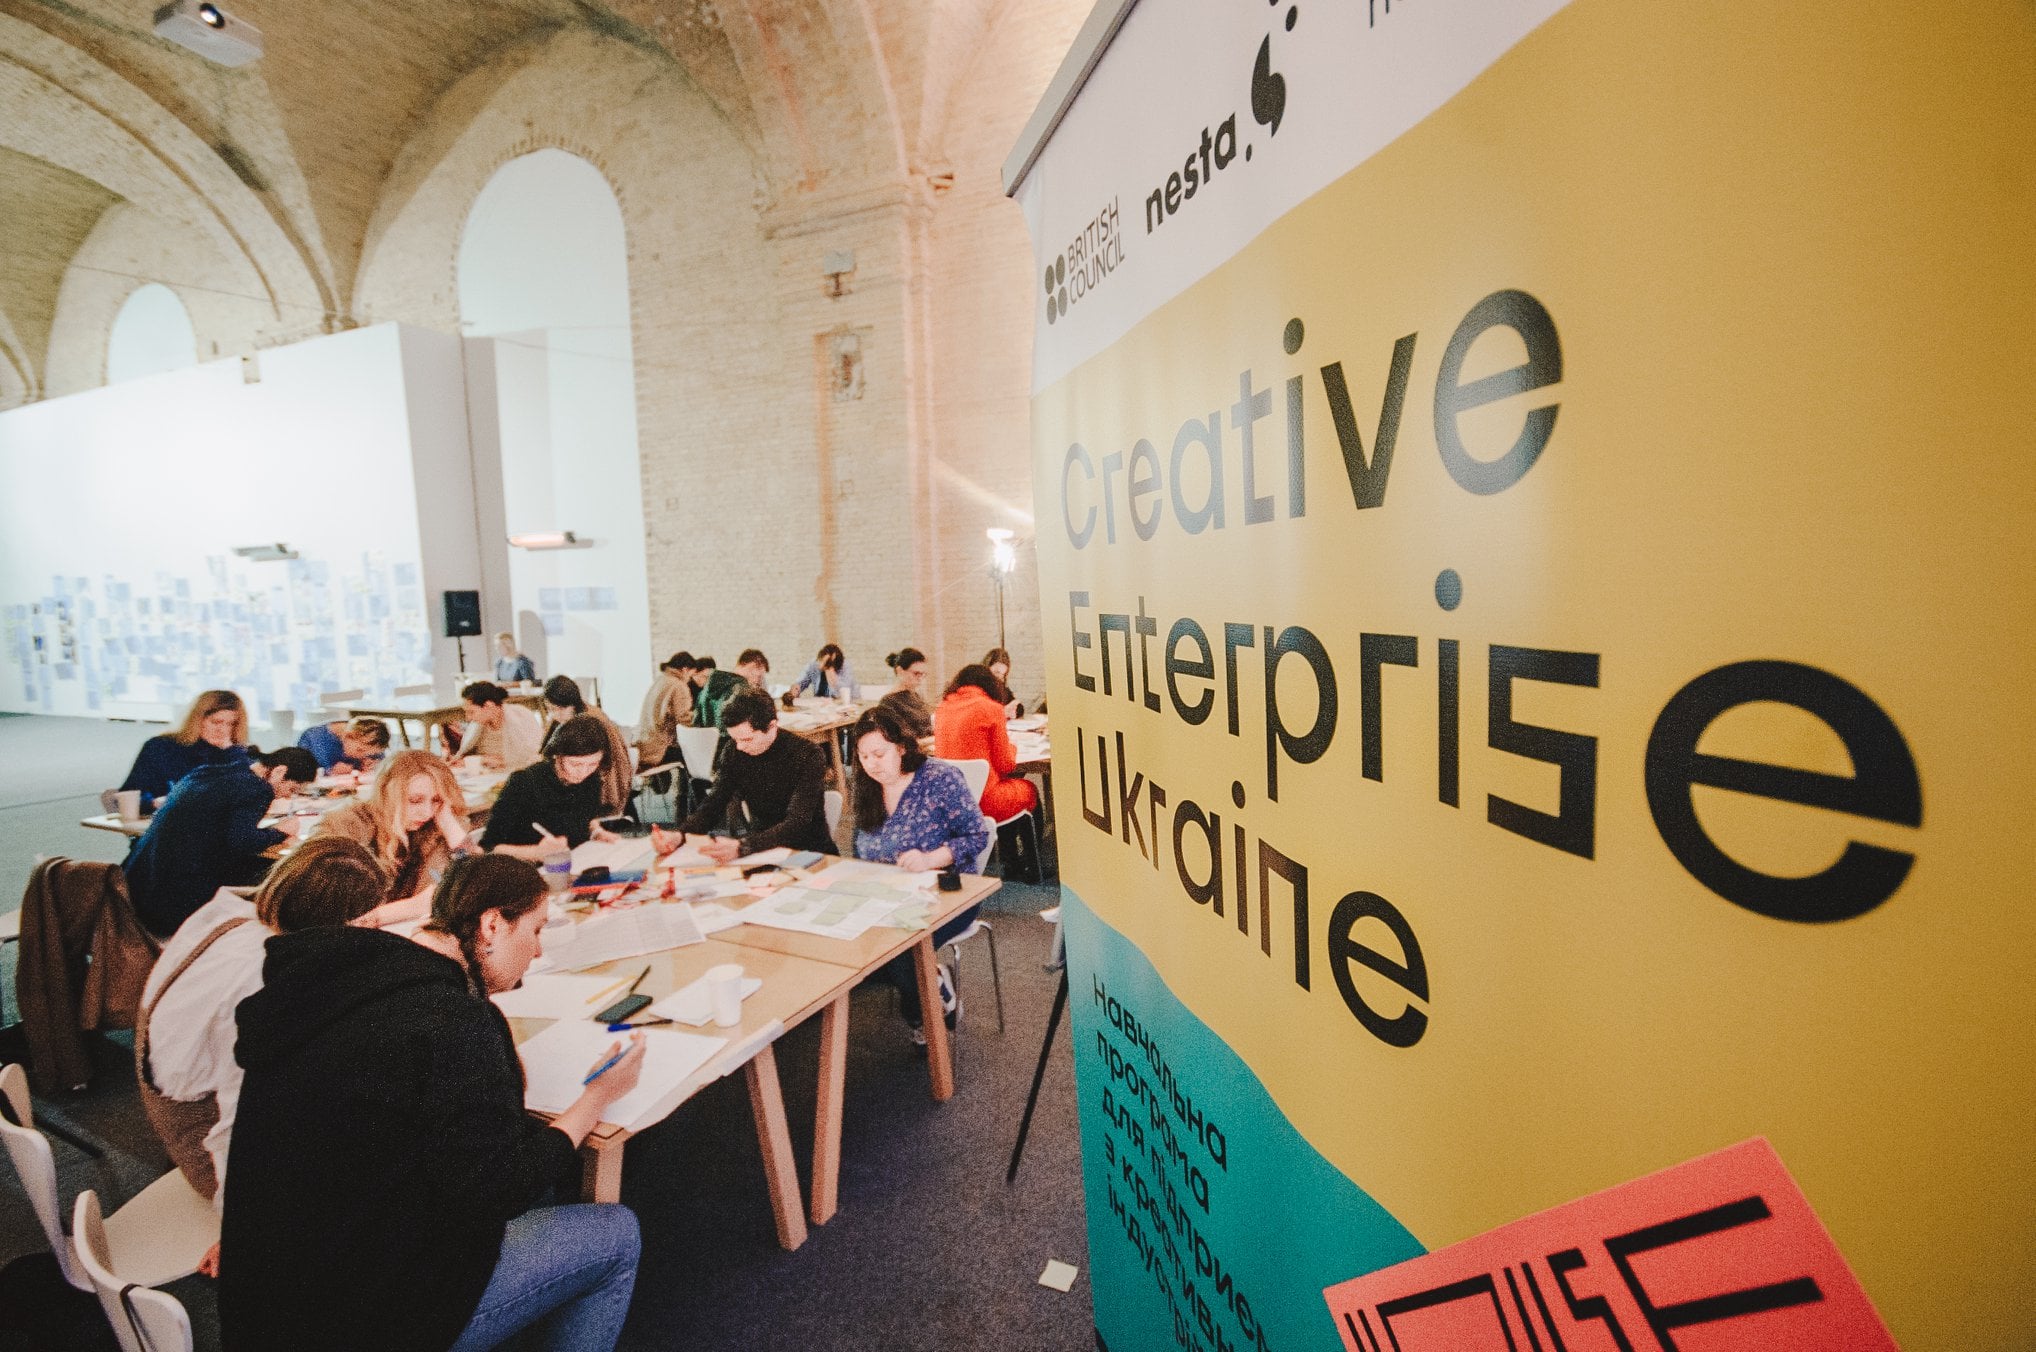 Creative Enterprise Ukraine